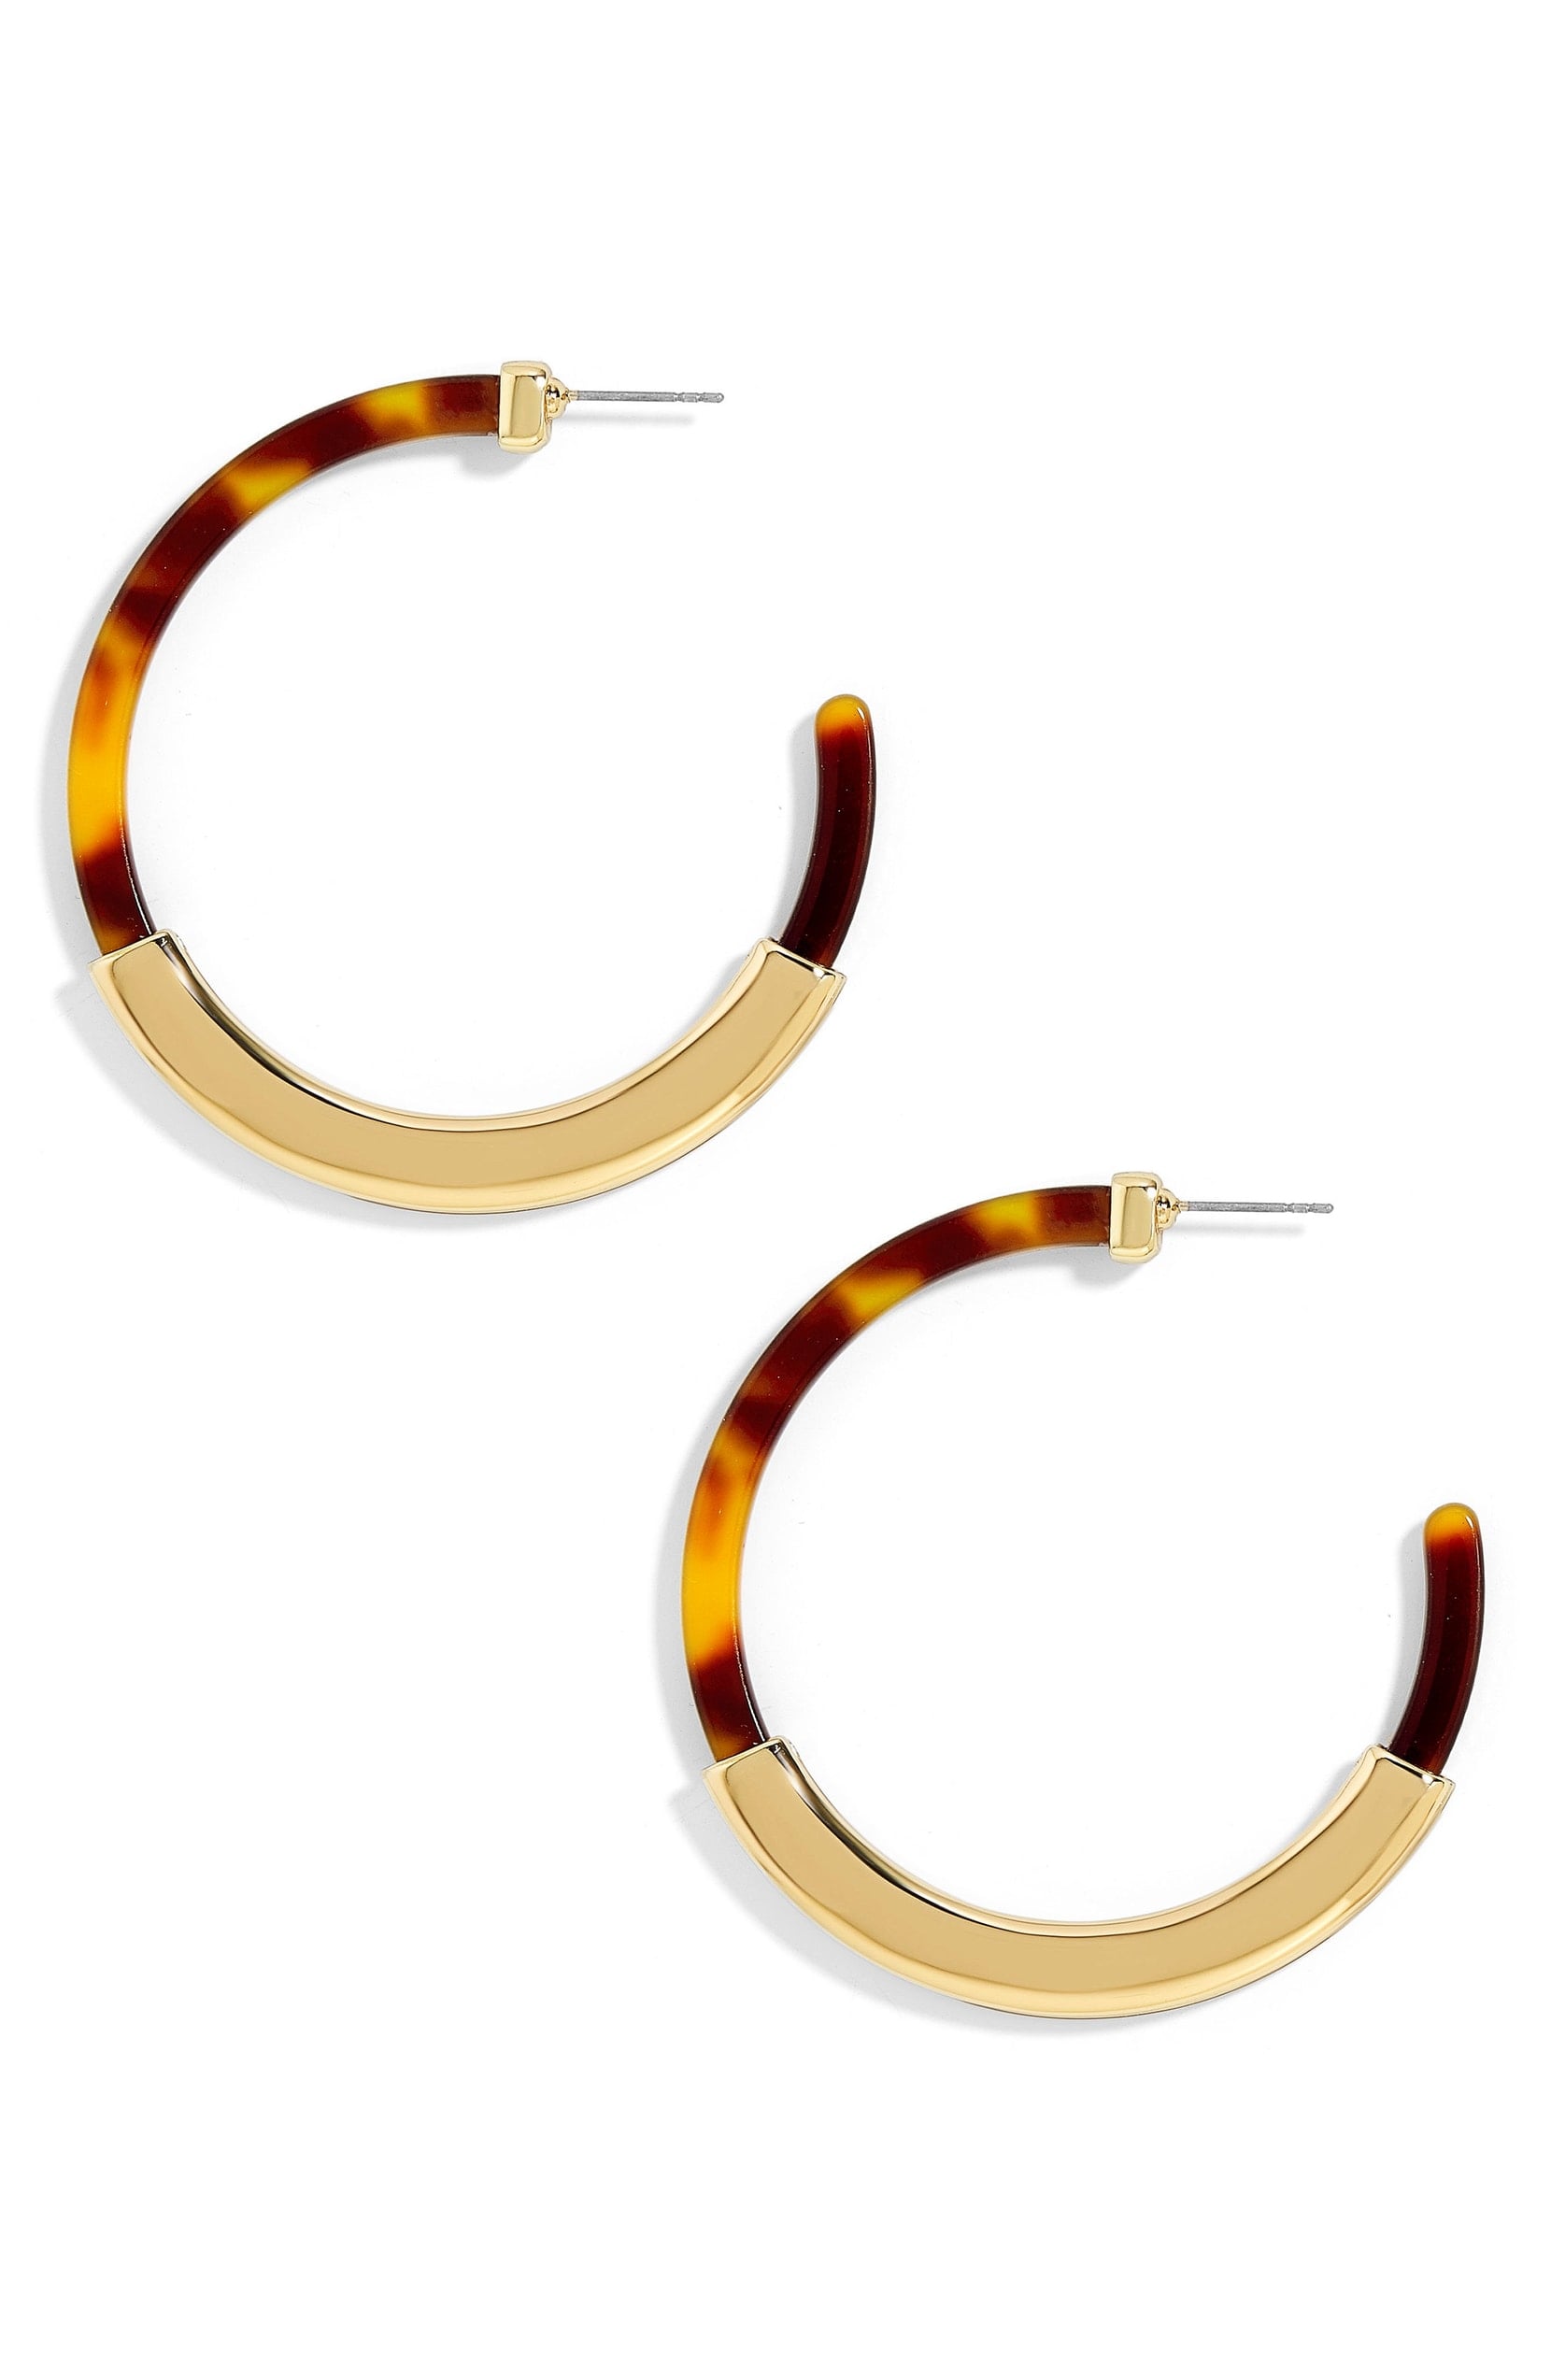 Agelloc Acrylic Mottled Hoop Earrings Acrylic Earrings Geometric Natural Resin Earring Studs for Women Girls Lovely Gifts at Valentine's Day